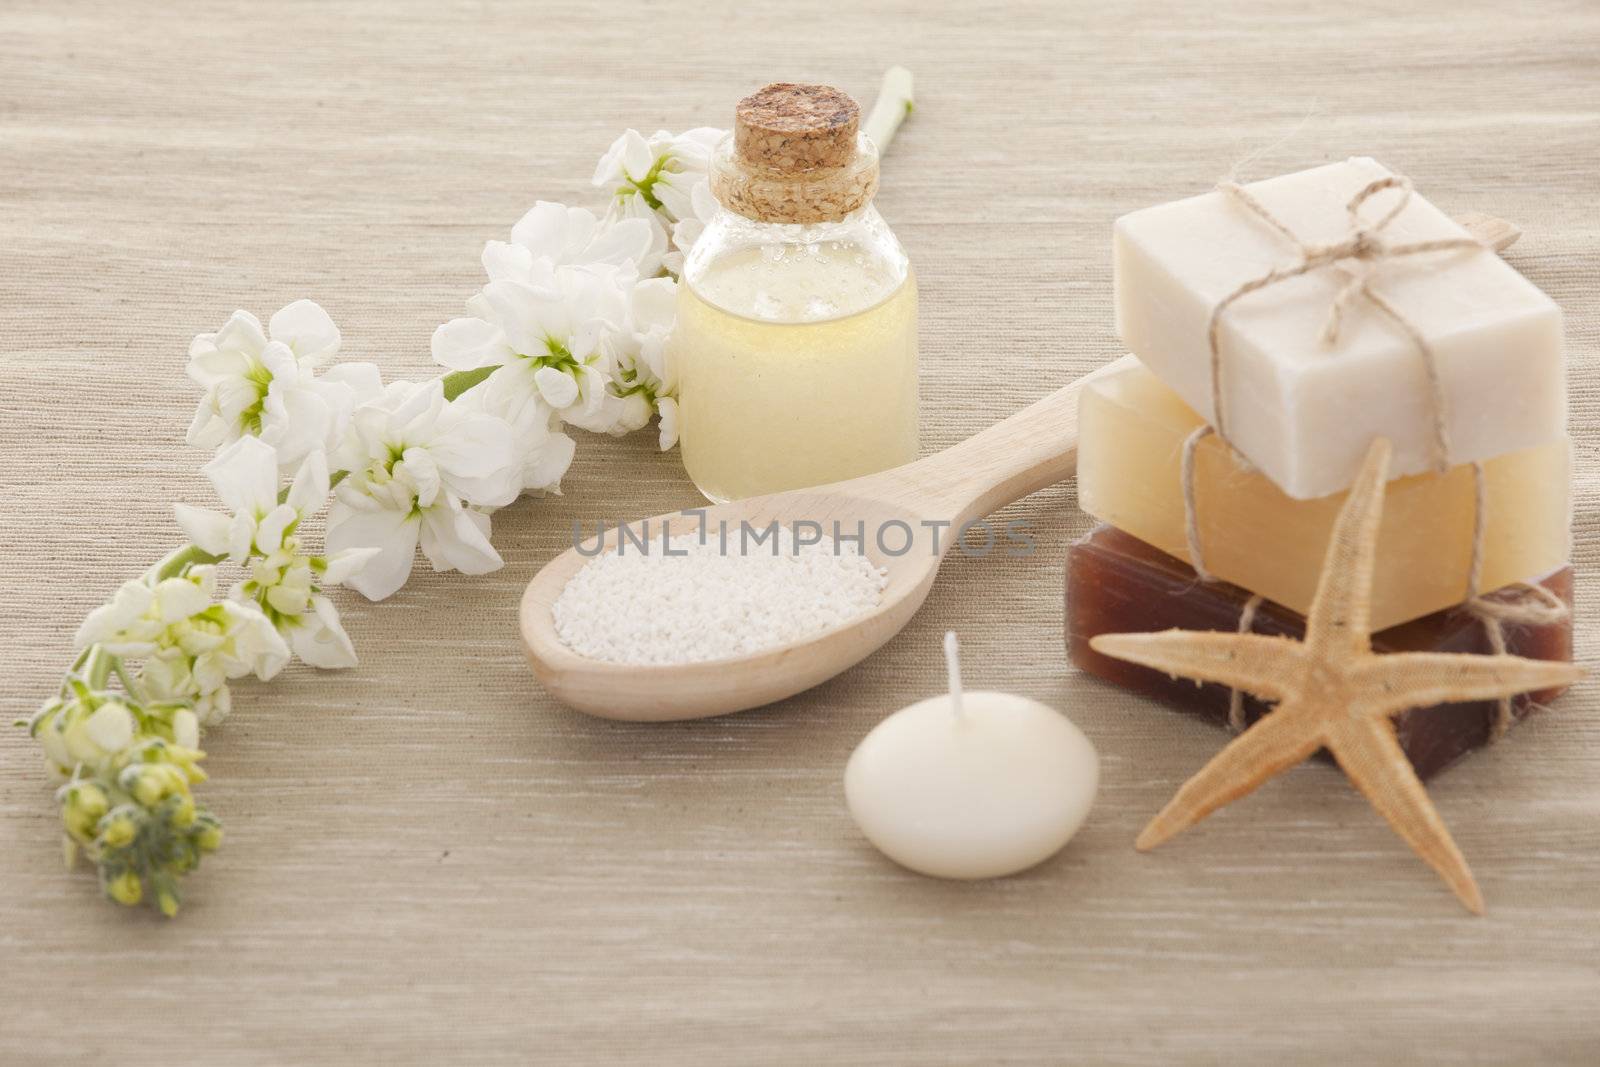 Handmade Soap closeup.Spa products